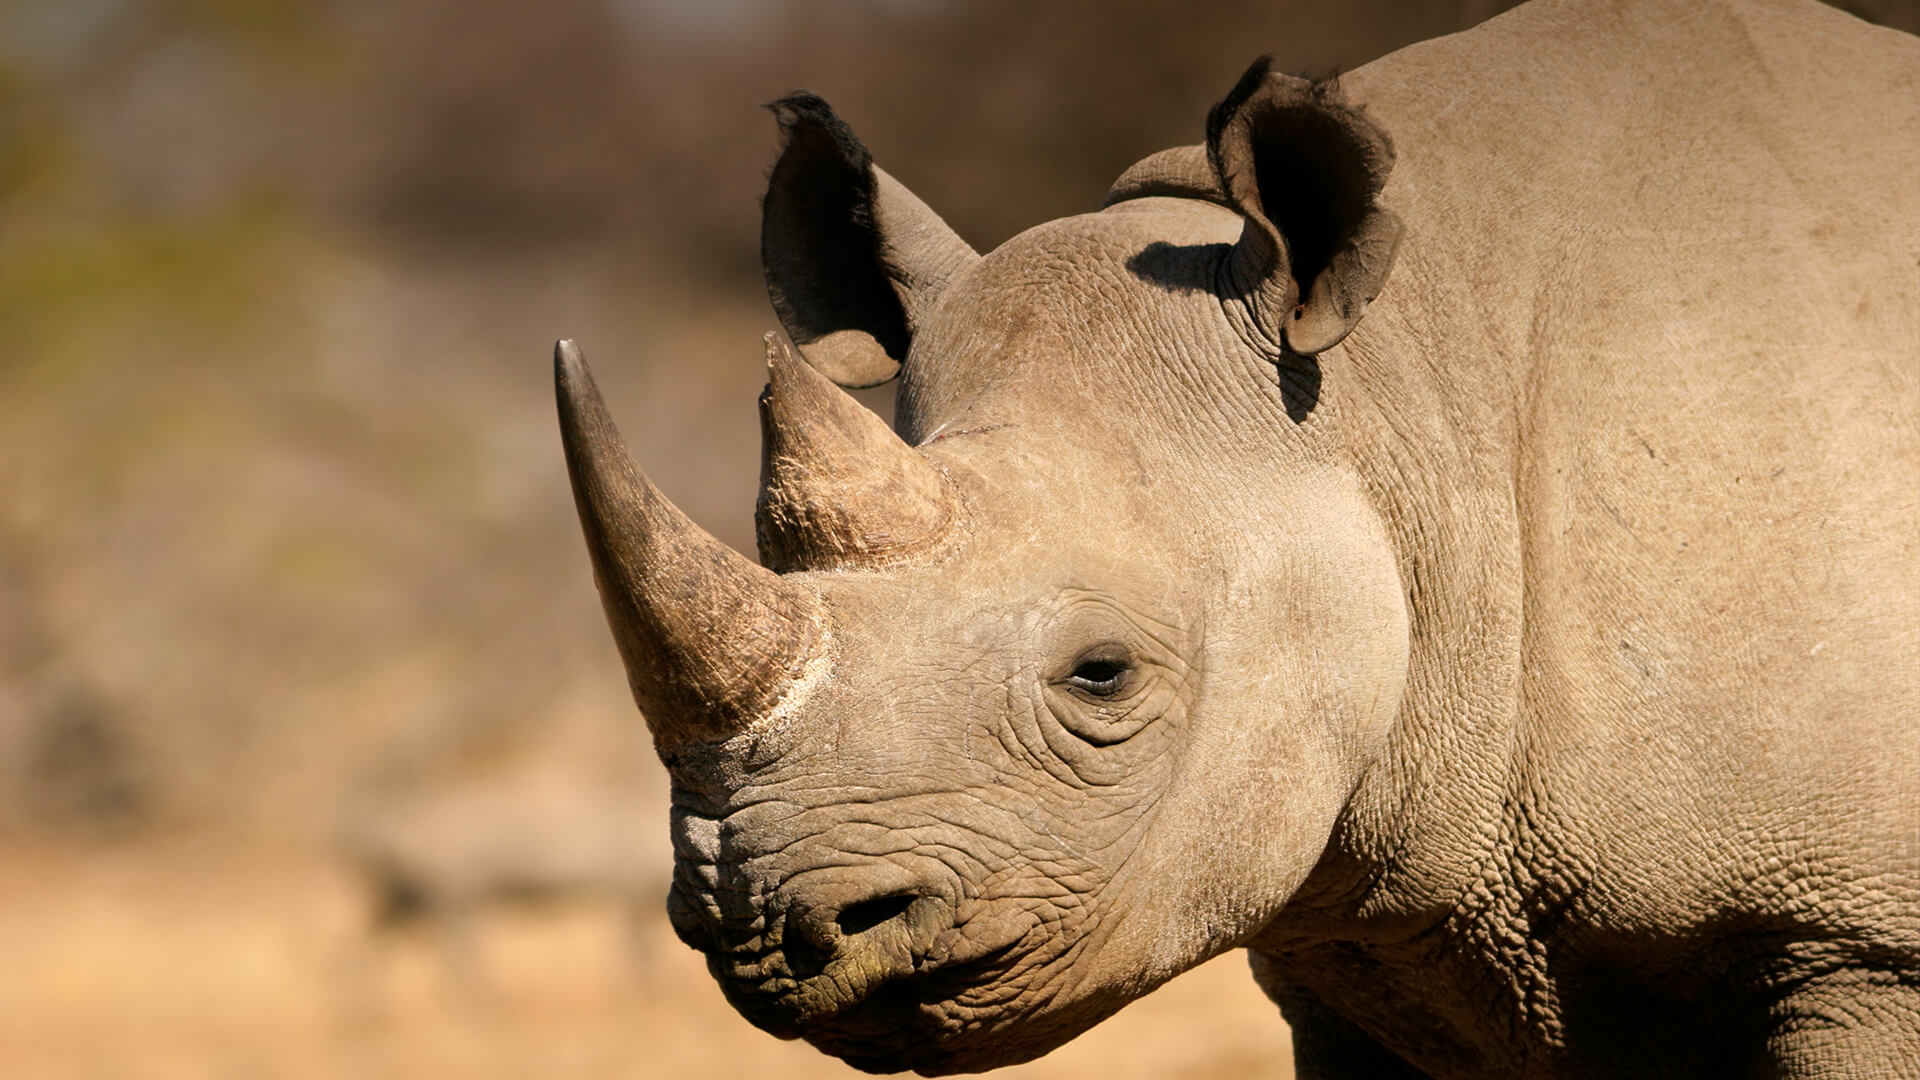 Detail Images Of Rhinoceros Nomer 28